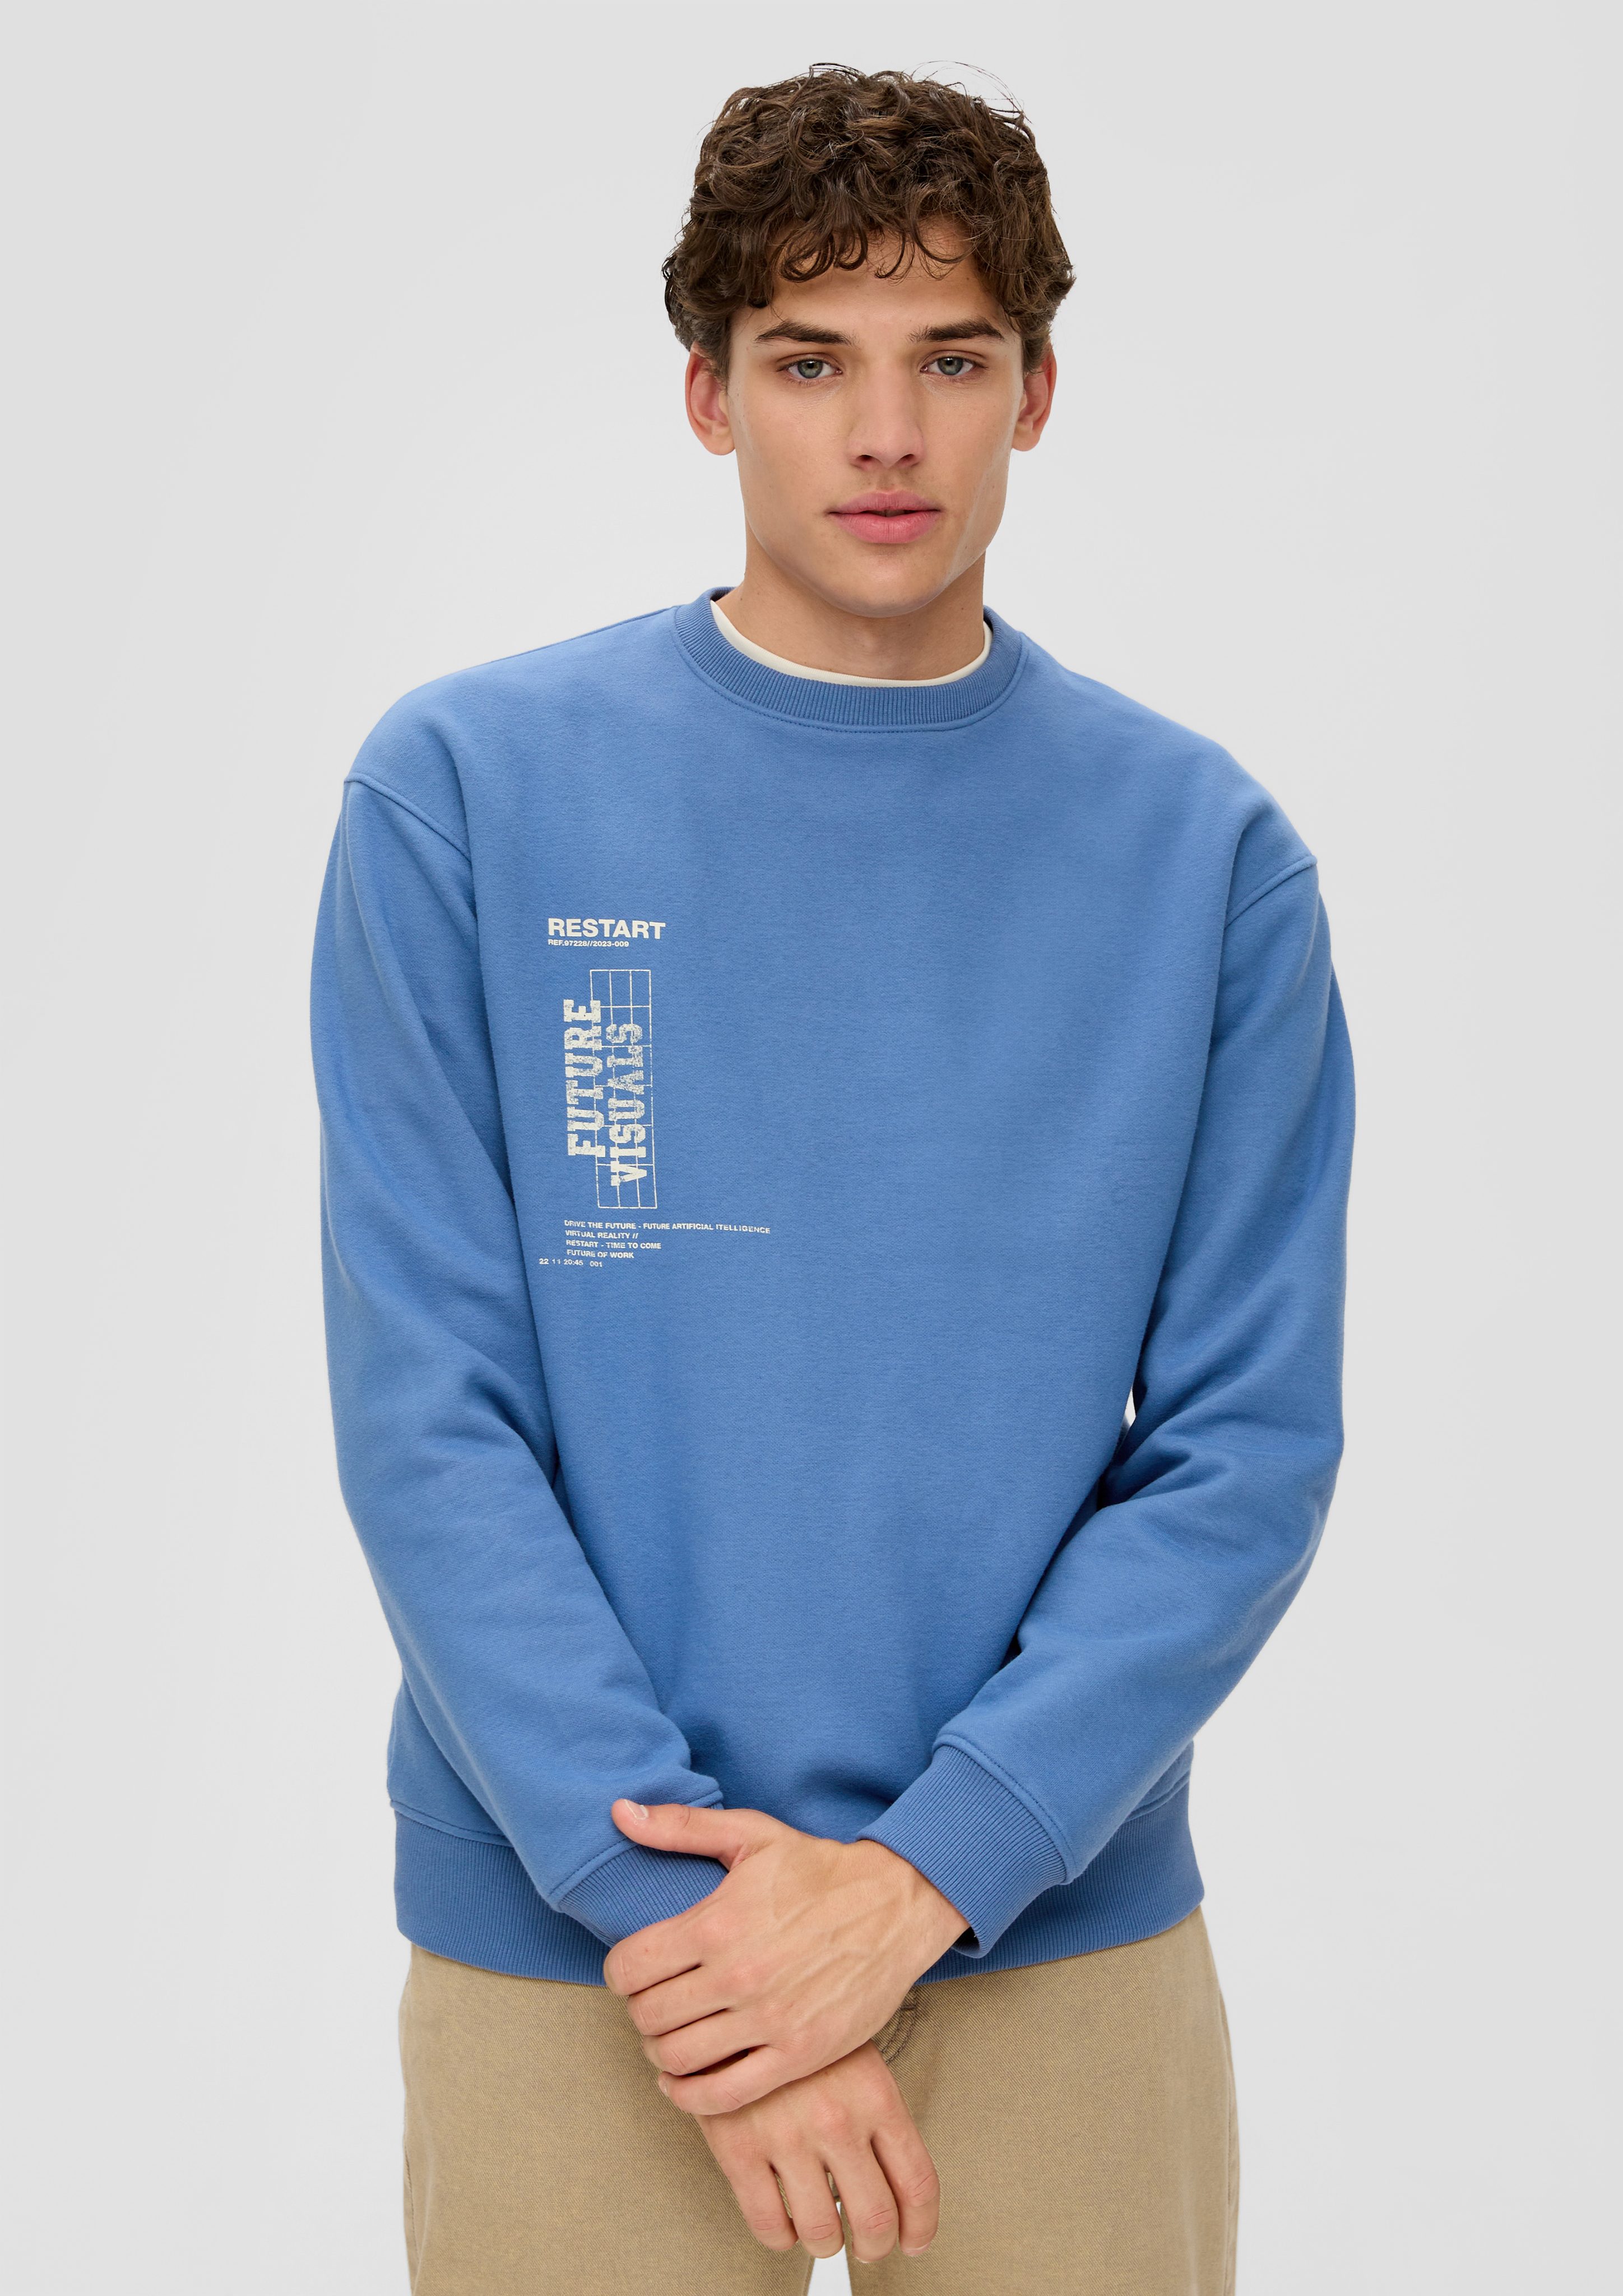 QS Sweatshirt Sweatshirt mit großem Rückenprint himmelblau